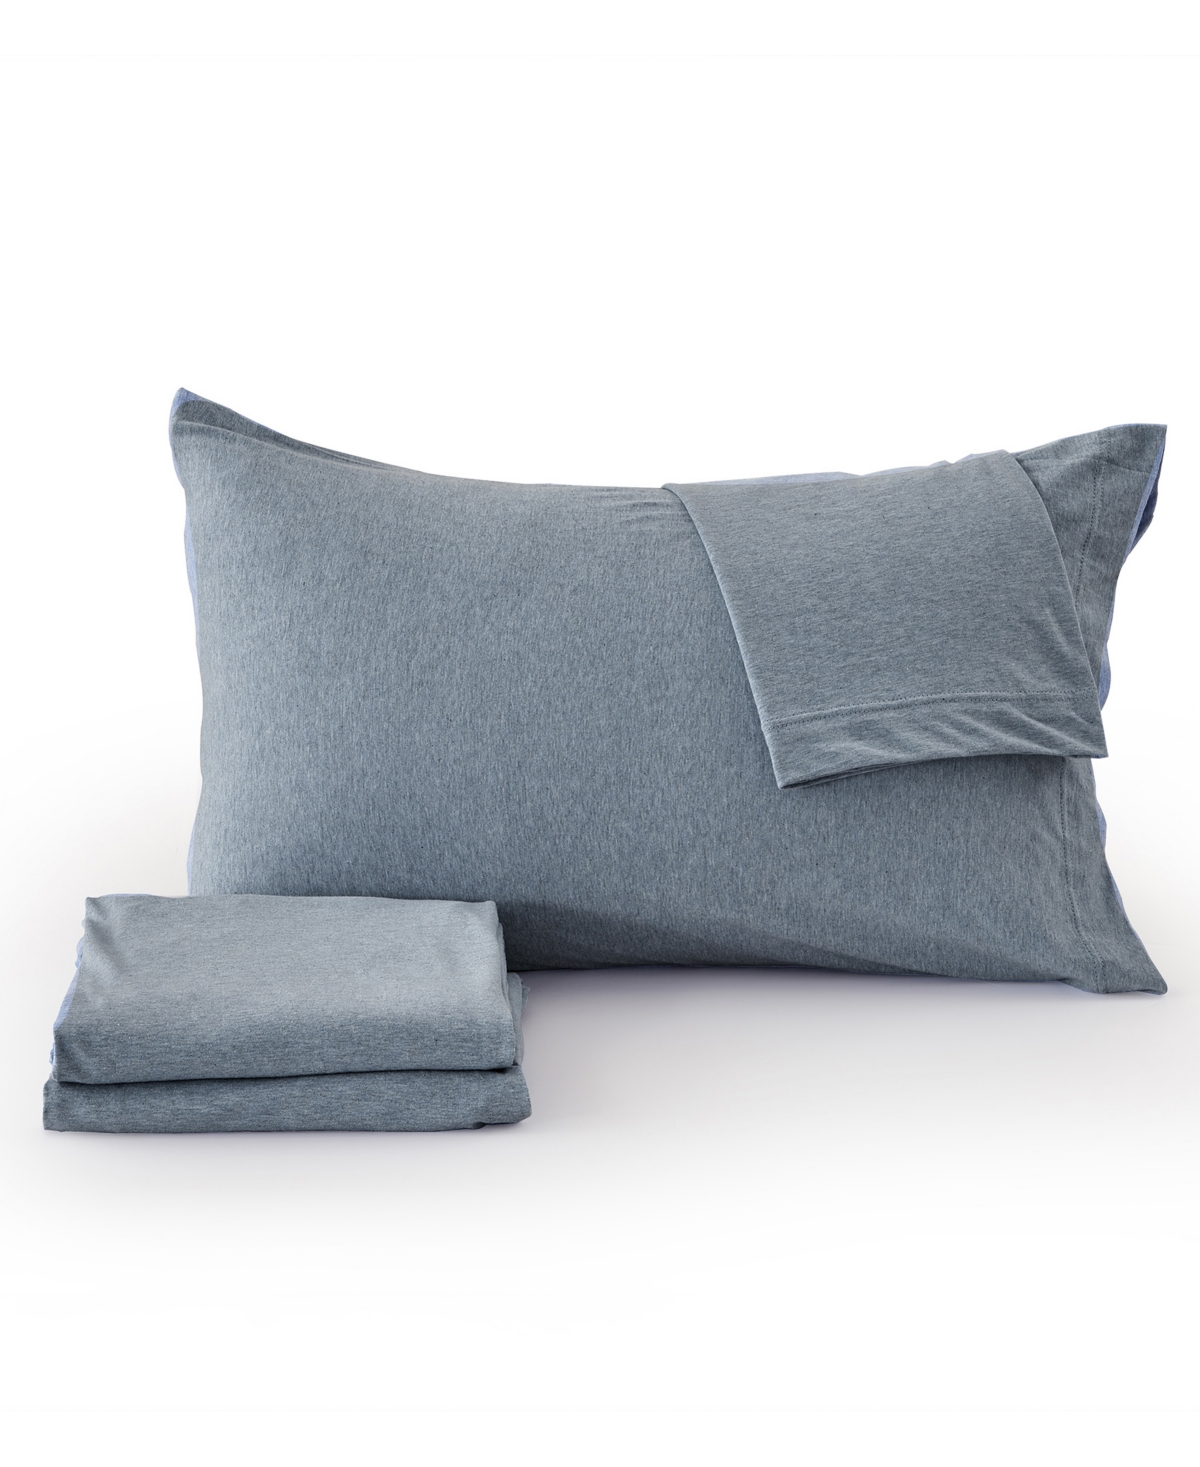 Premium Comforts Heathered Melange T-shirt Jersey Knit Cotton Blend 4 Piece Sheet Set, Twin Xl In Heathered Denim Blue